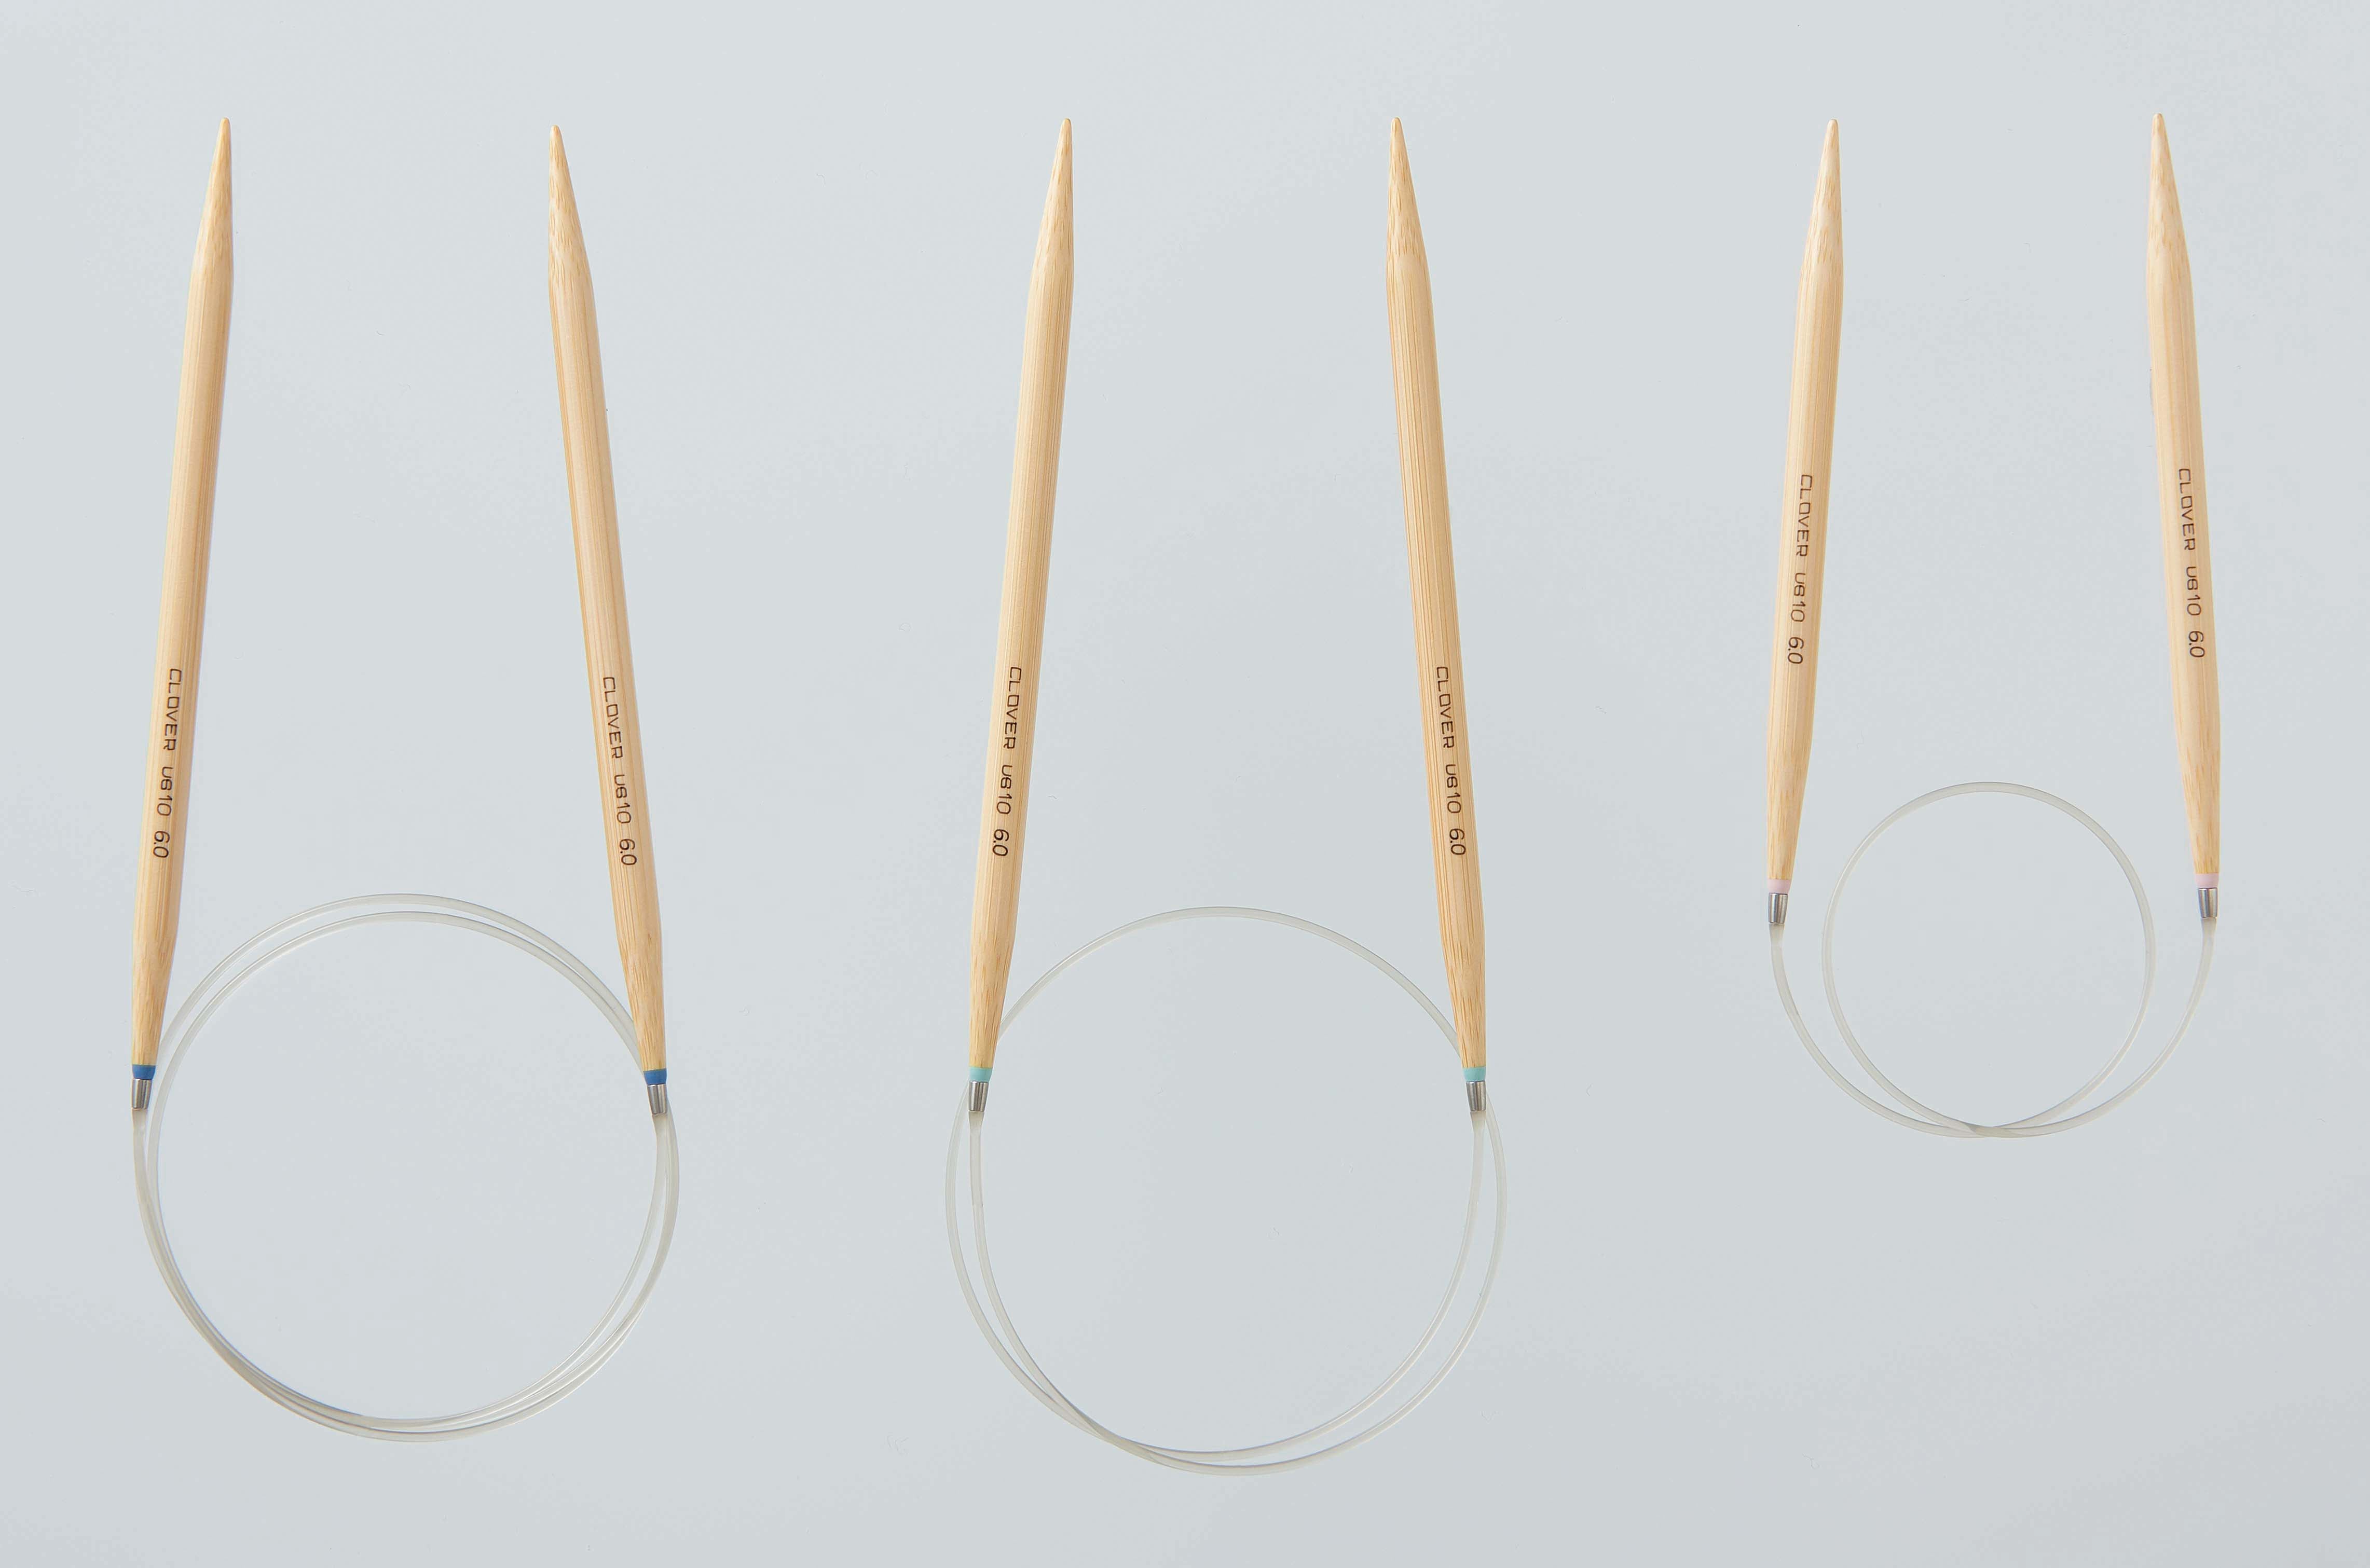 Takumi Bamboo Single Point Knitting Needles 9-Size 8/5mm - 051221204081